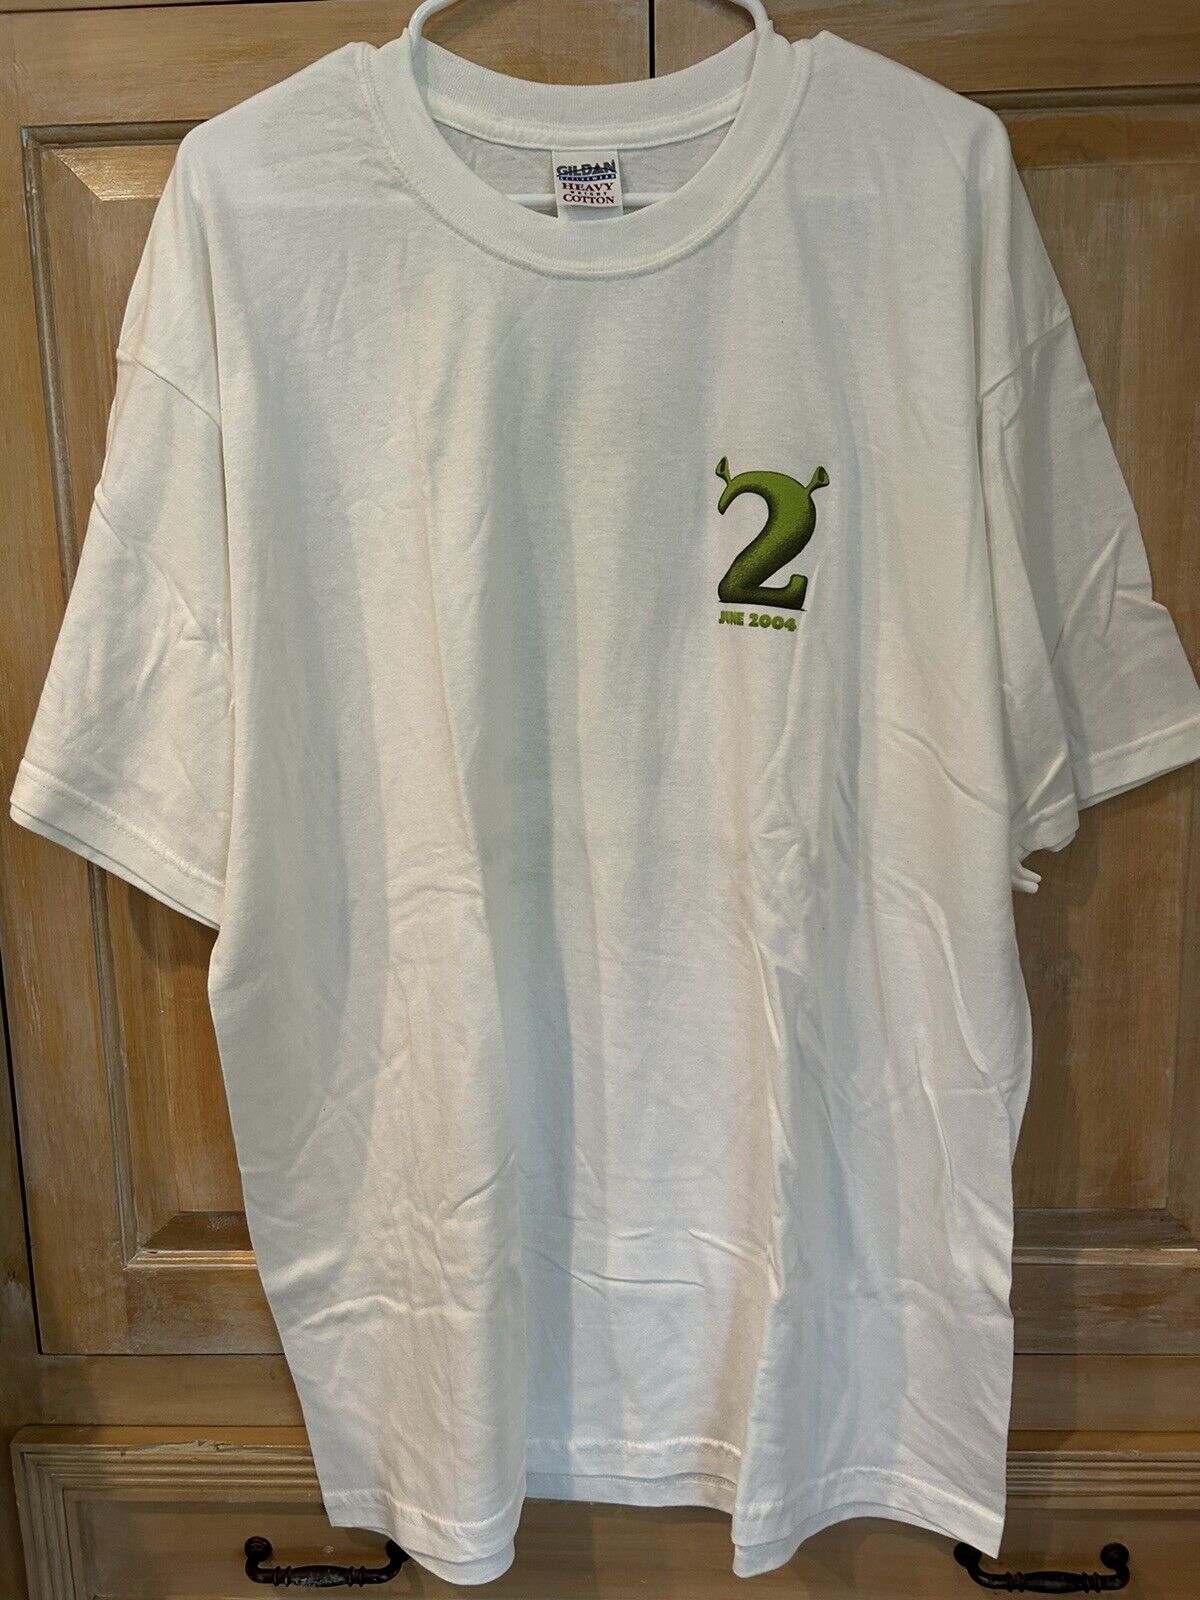 Vintage 2004 Dreamworks Shrek 2 Animated Movie Theatre Promo T-Shirt Size XL